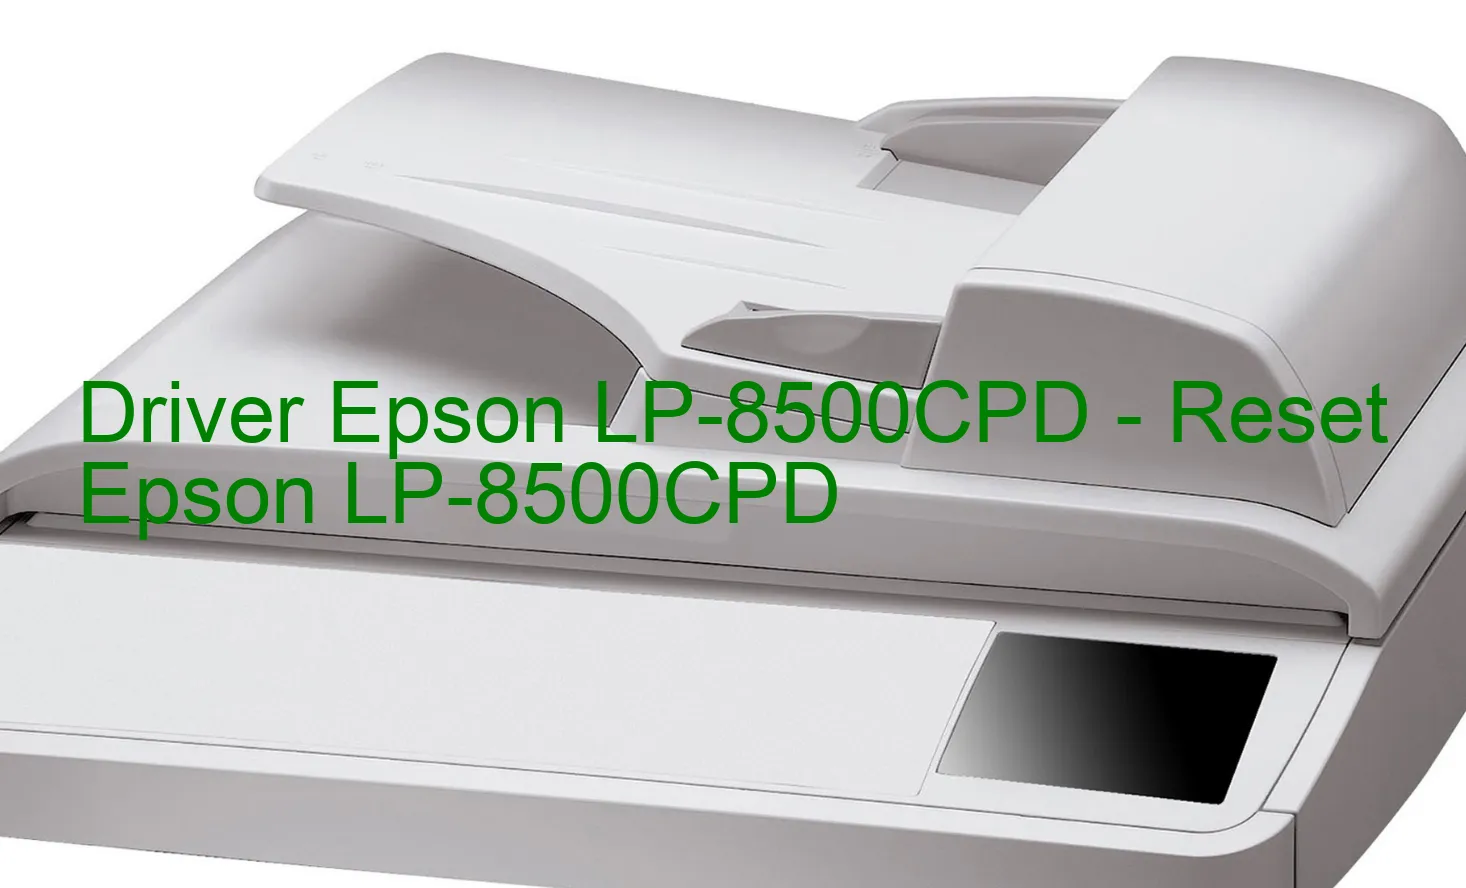 Epson LP-8500CPDのドライバー、Epson LP-8500CPDのリセットソフトウェア